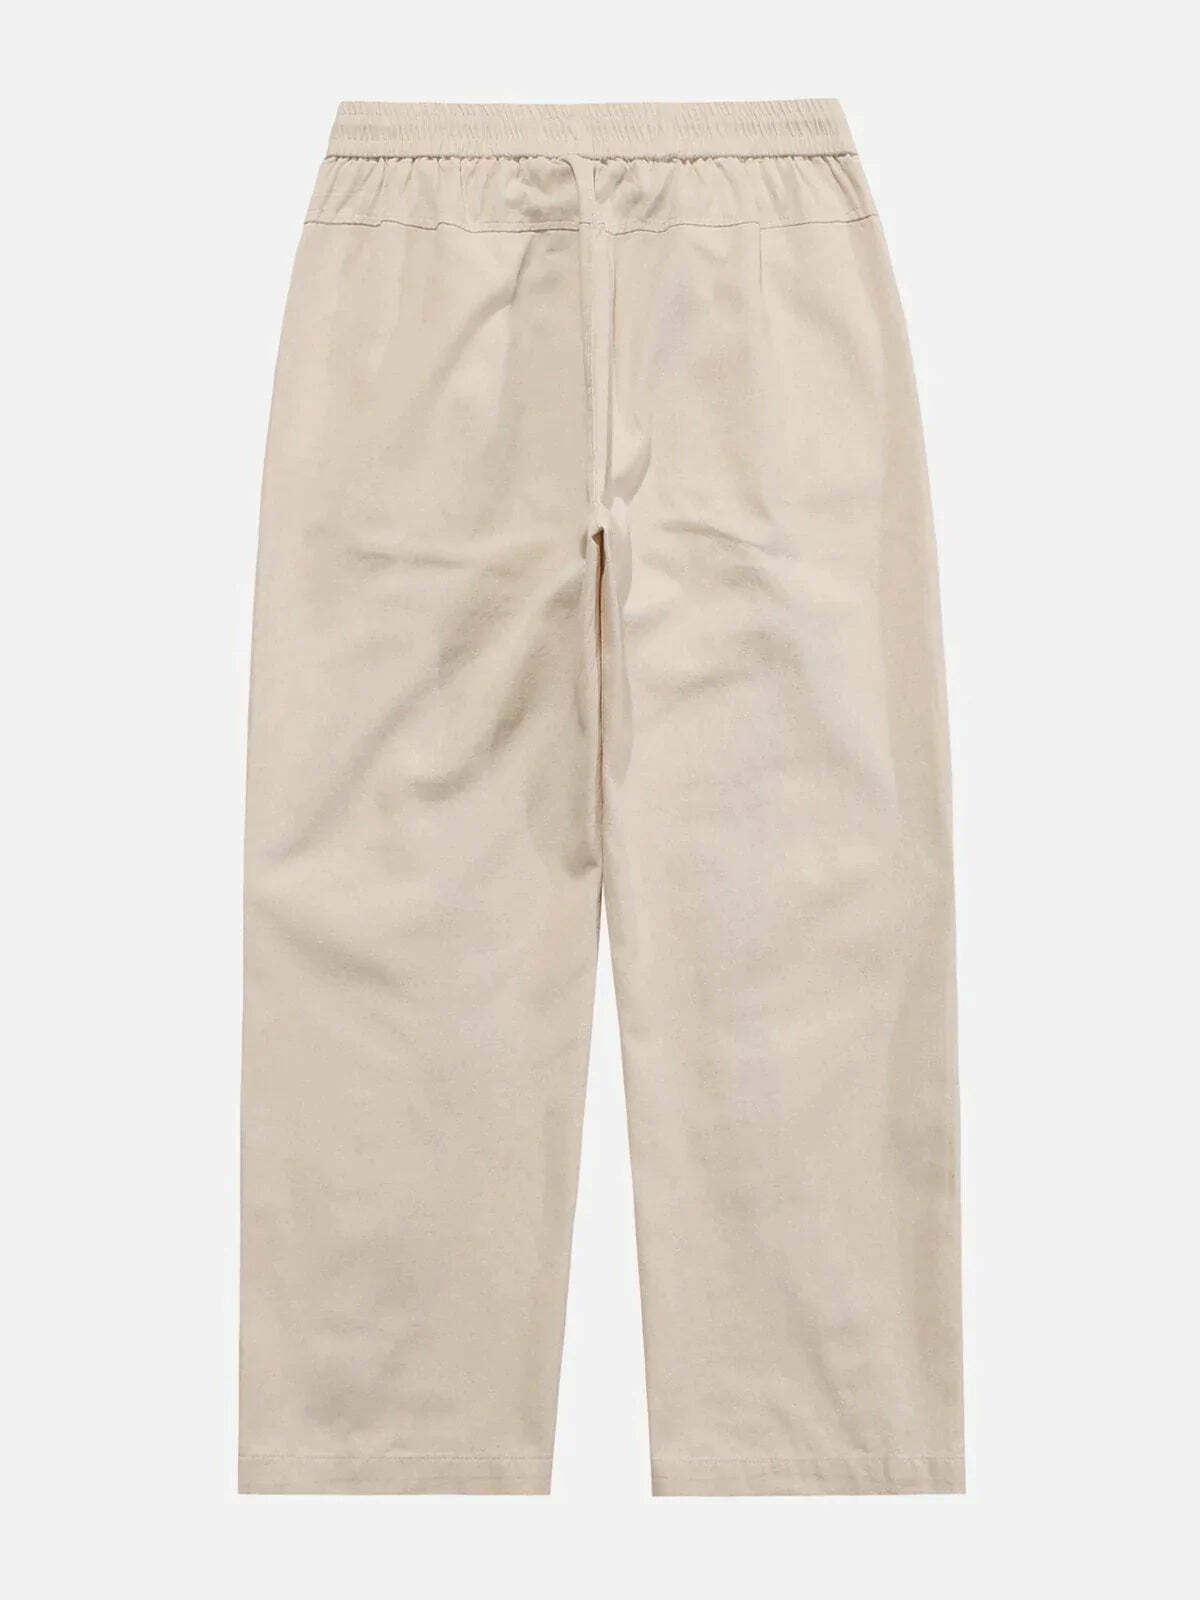 zipperembellished cargo pants edgy streetwear essential 6631